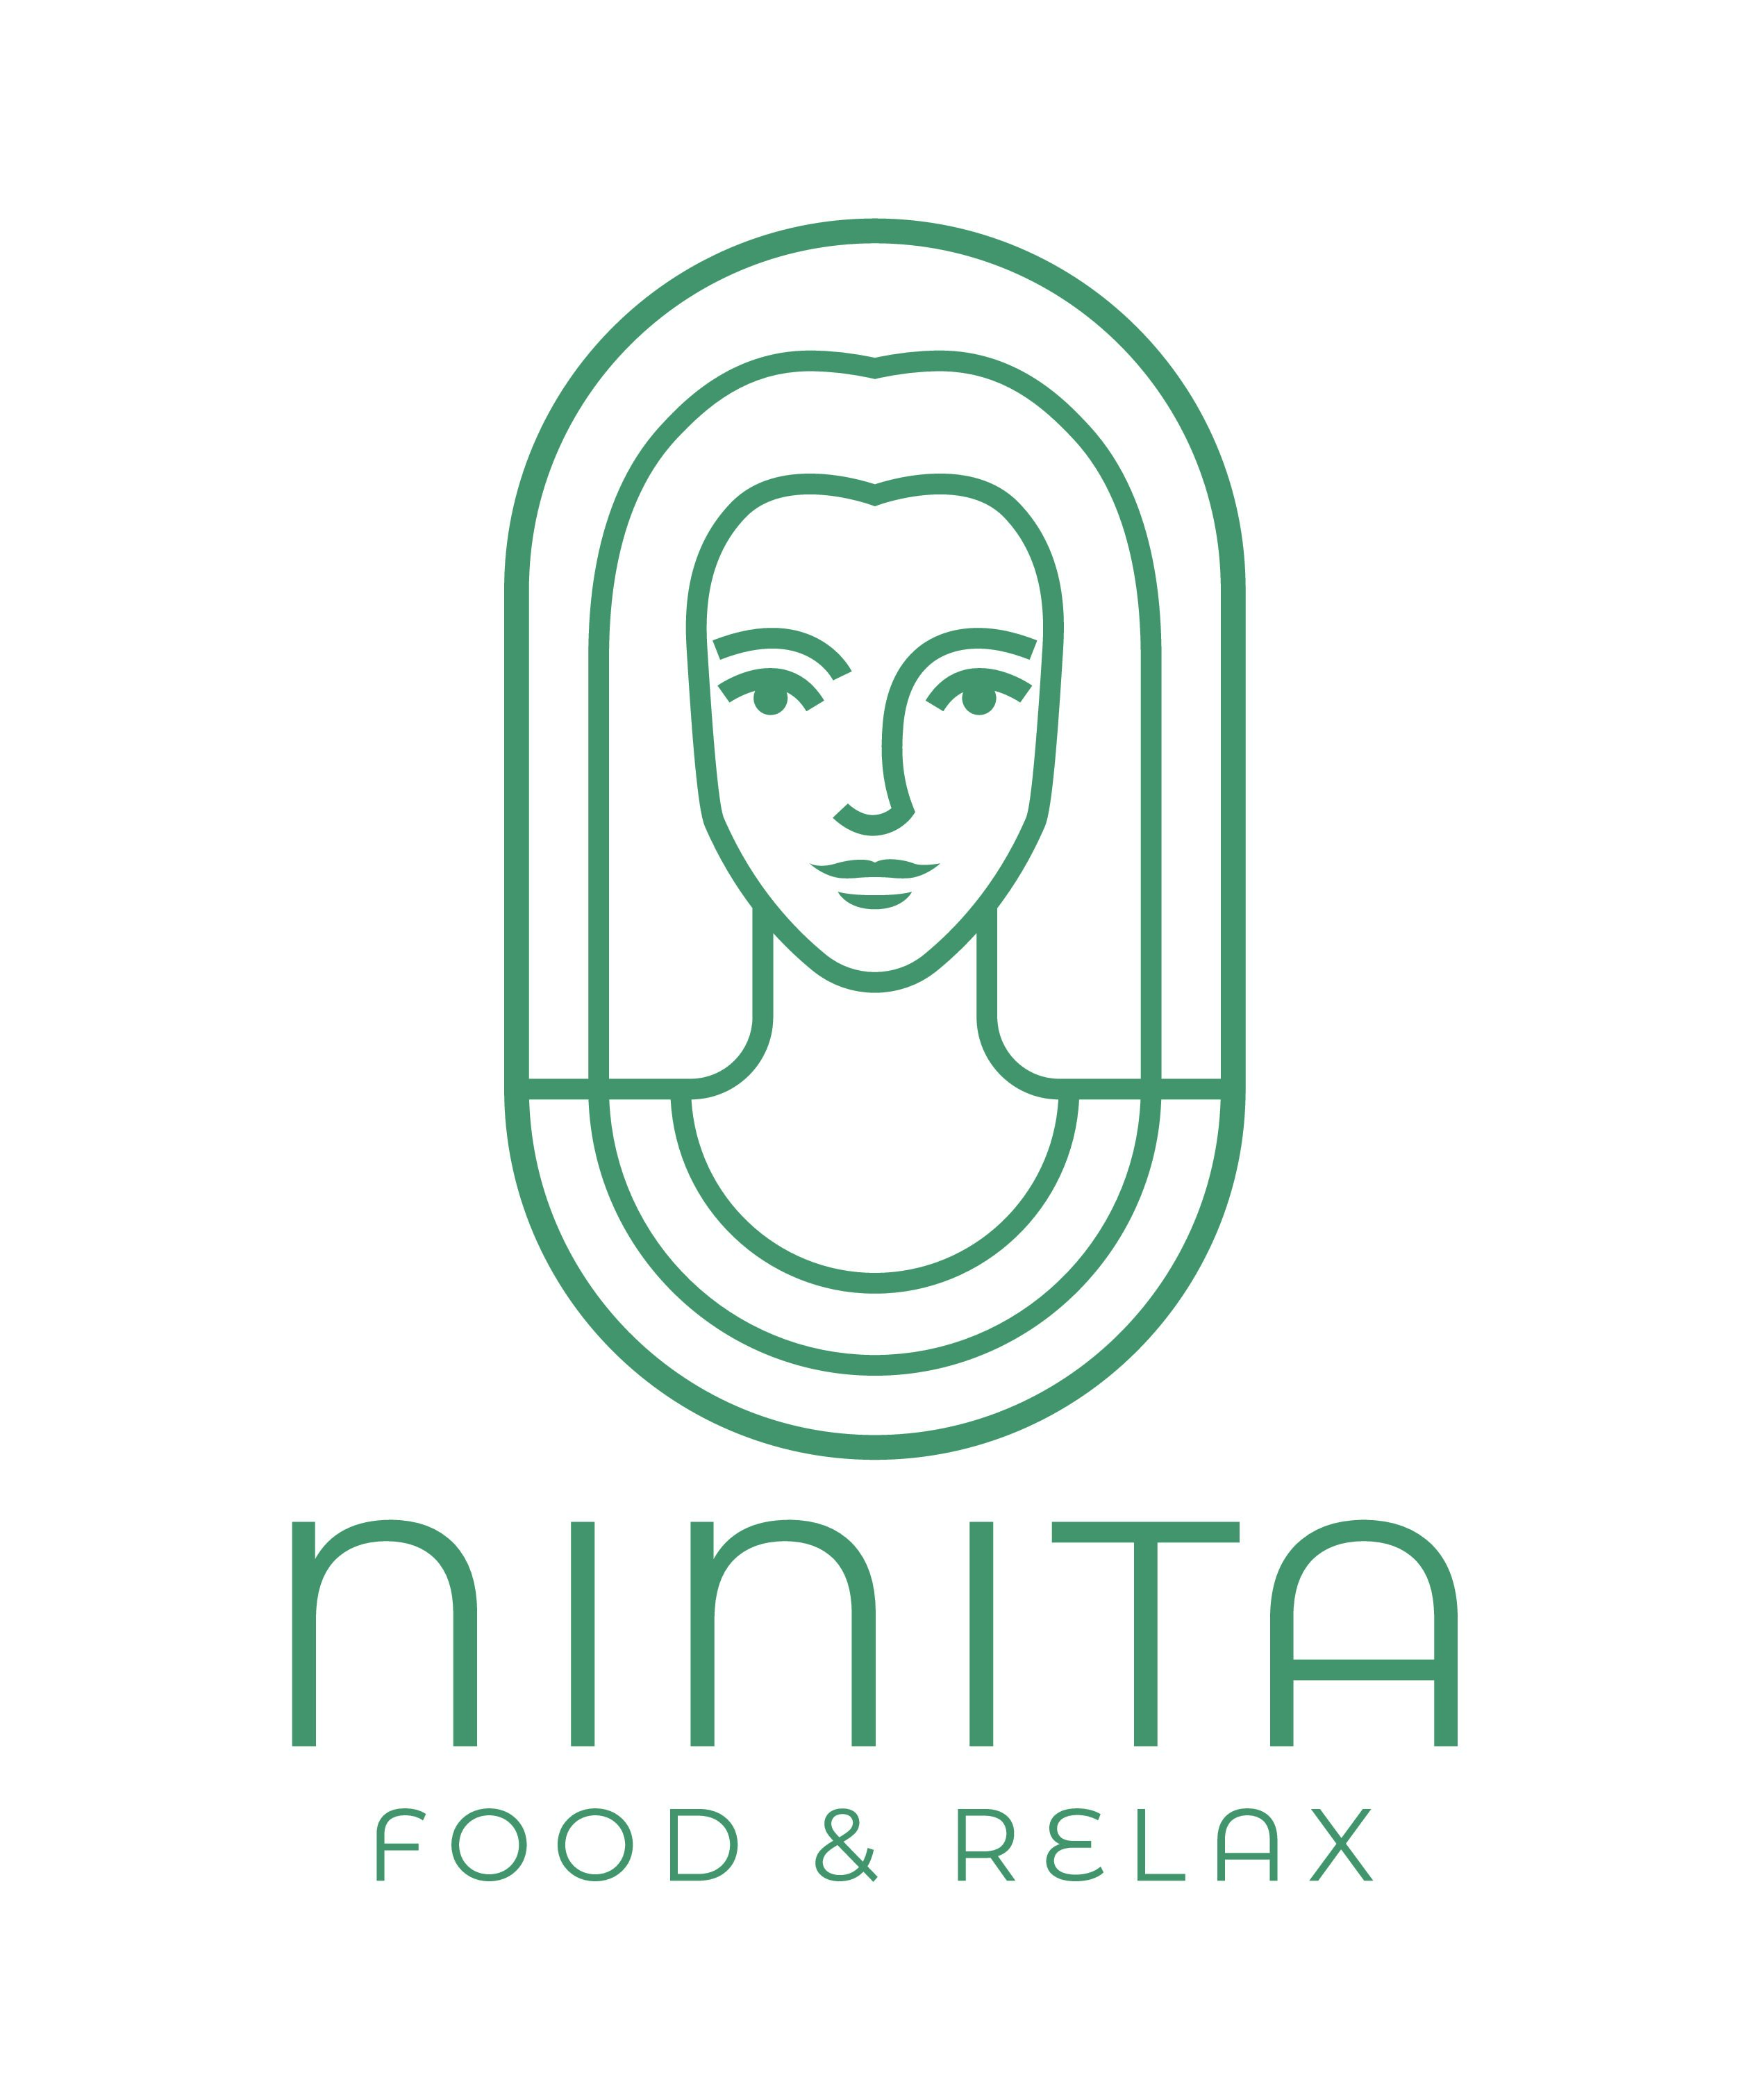 Ninita Food & Relax